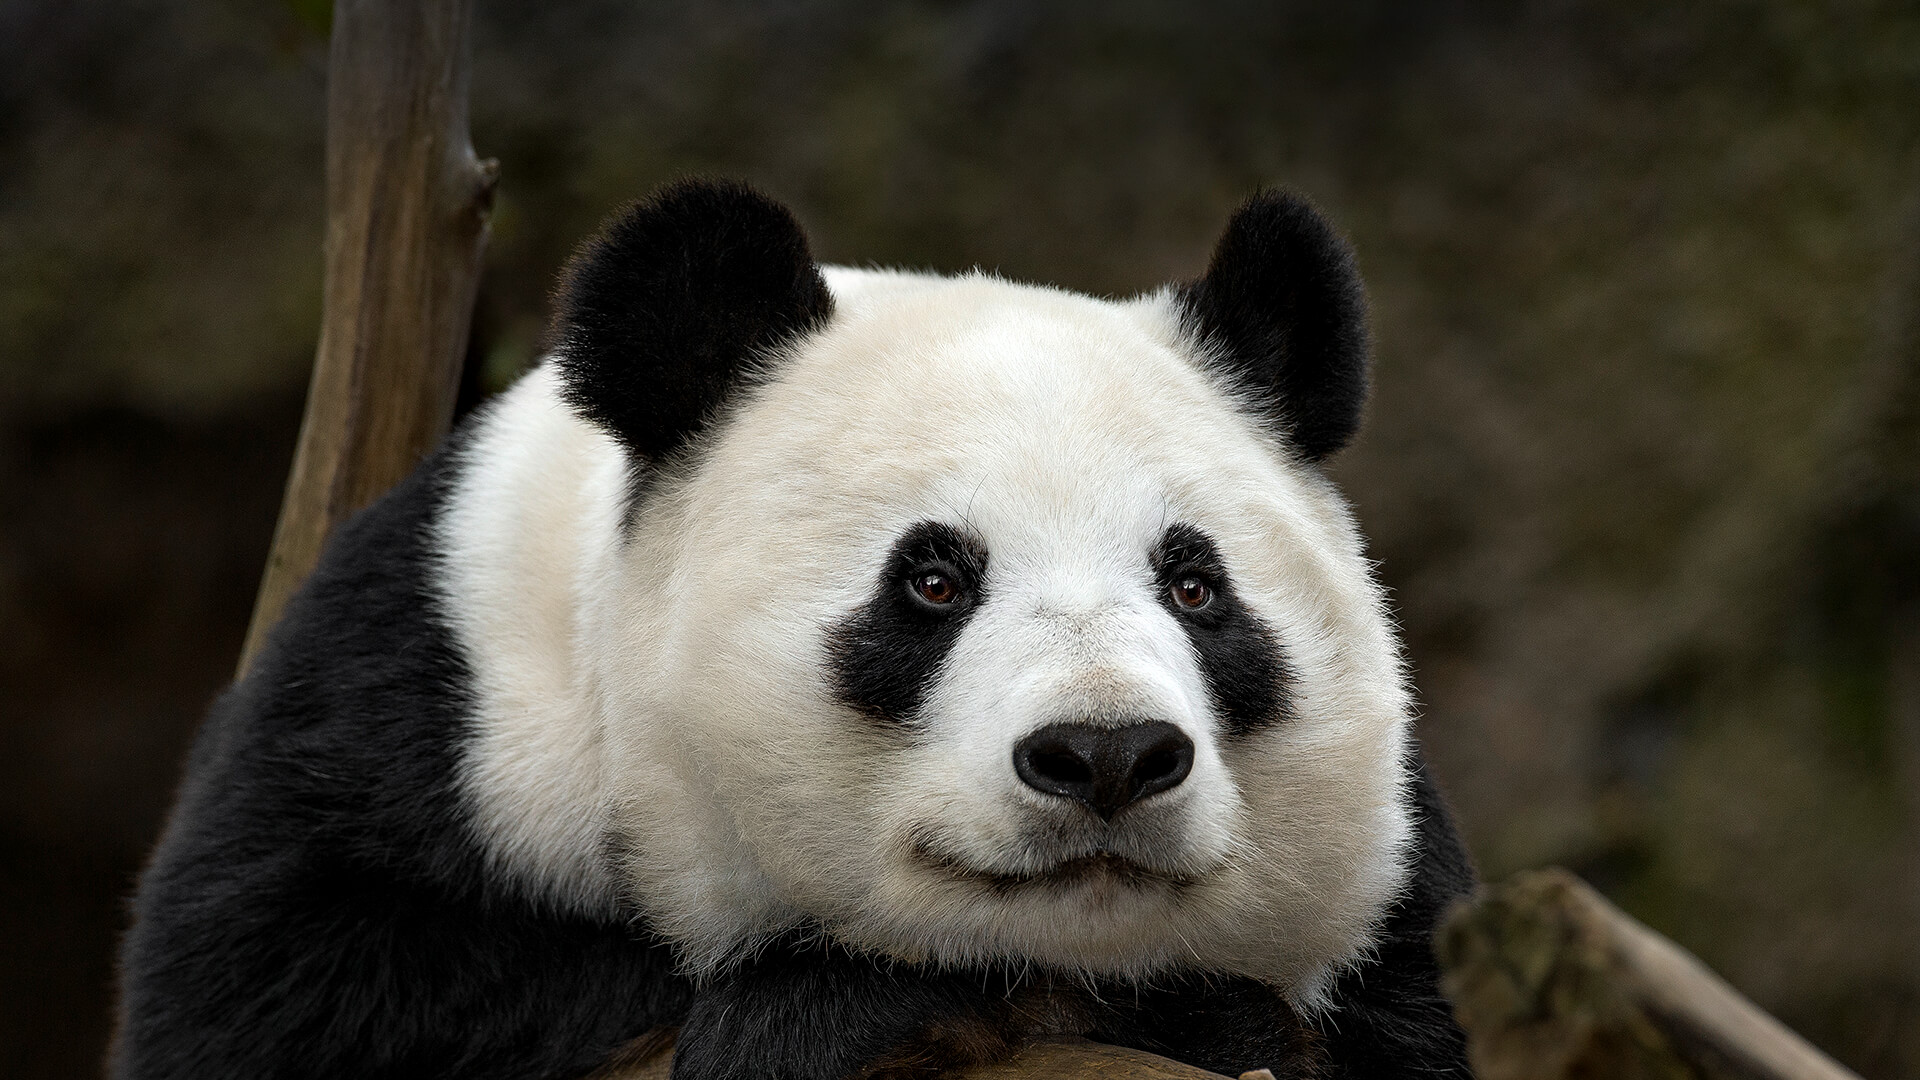 Giant Panda Bai Yun gazes into the distance